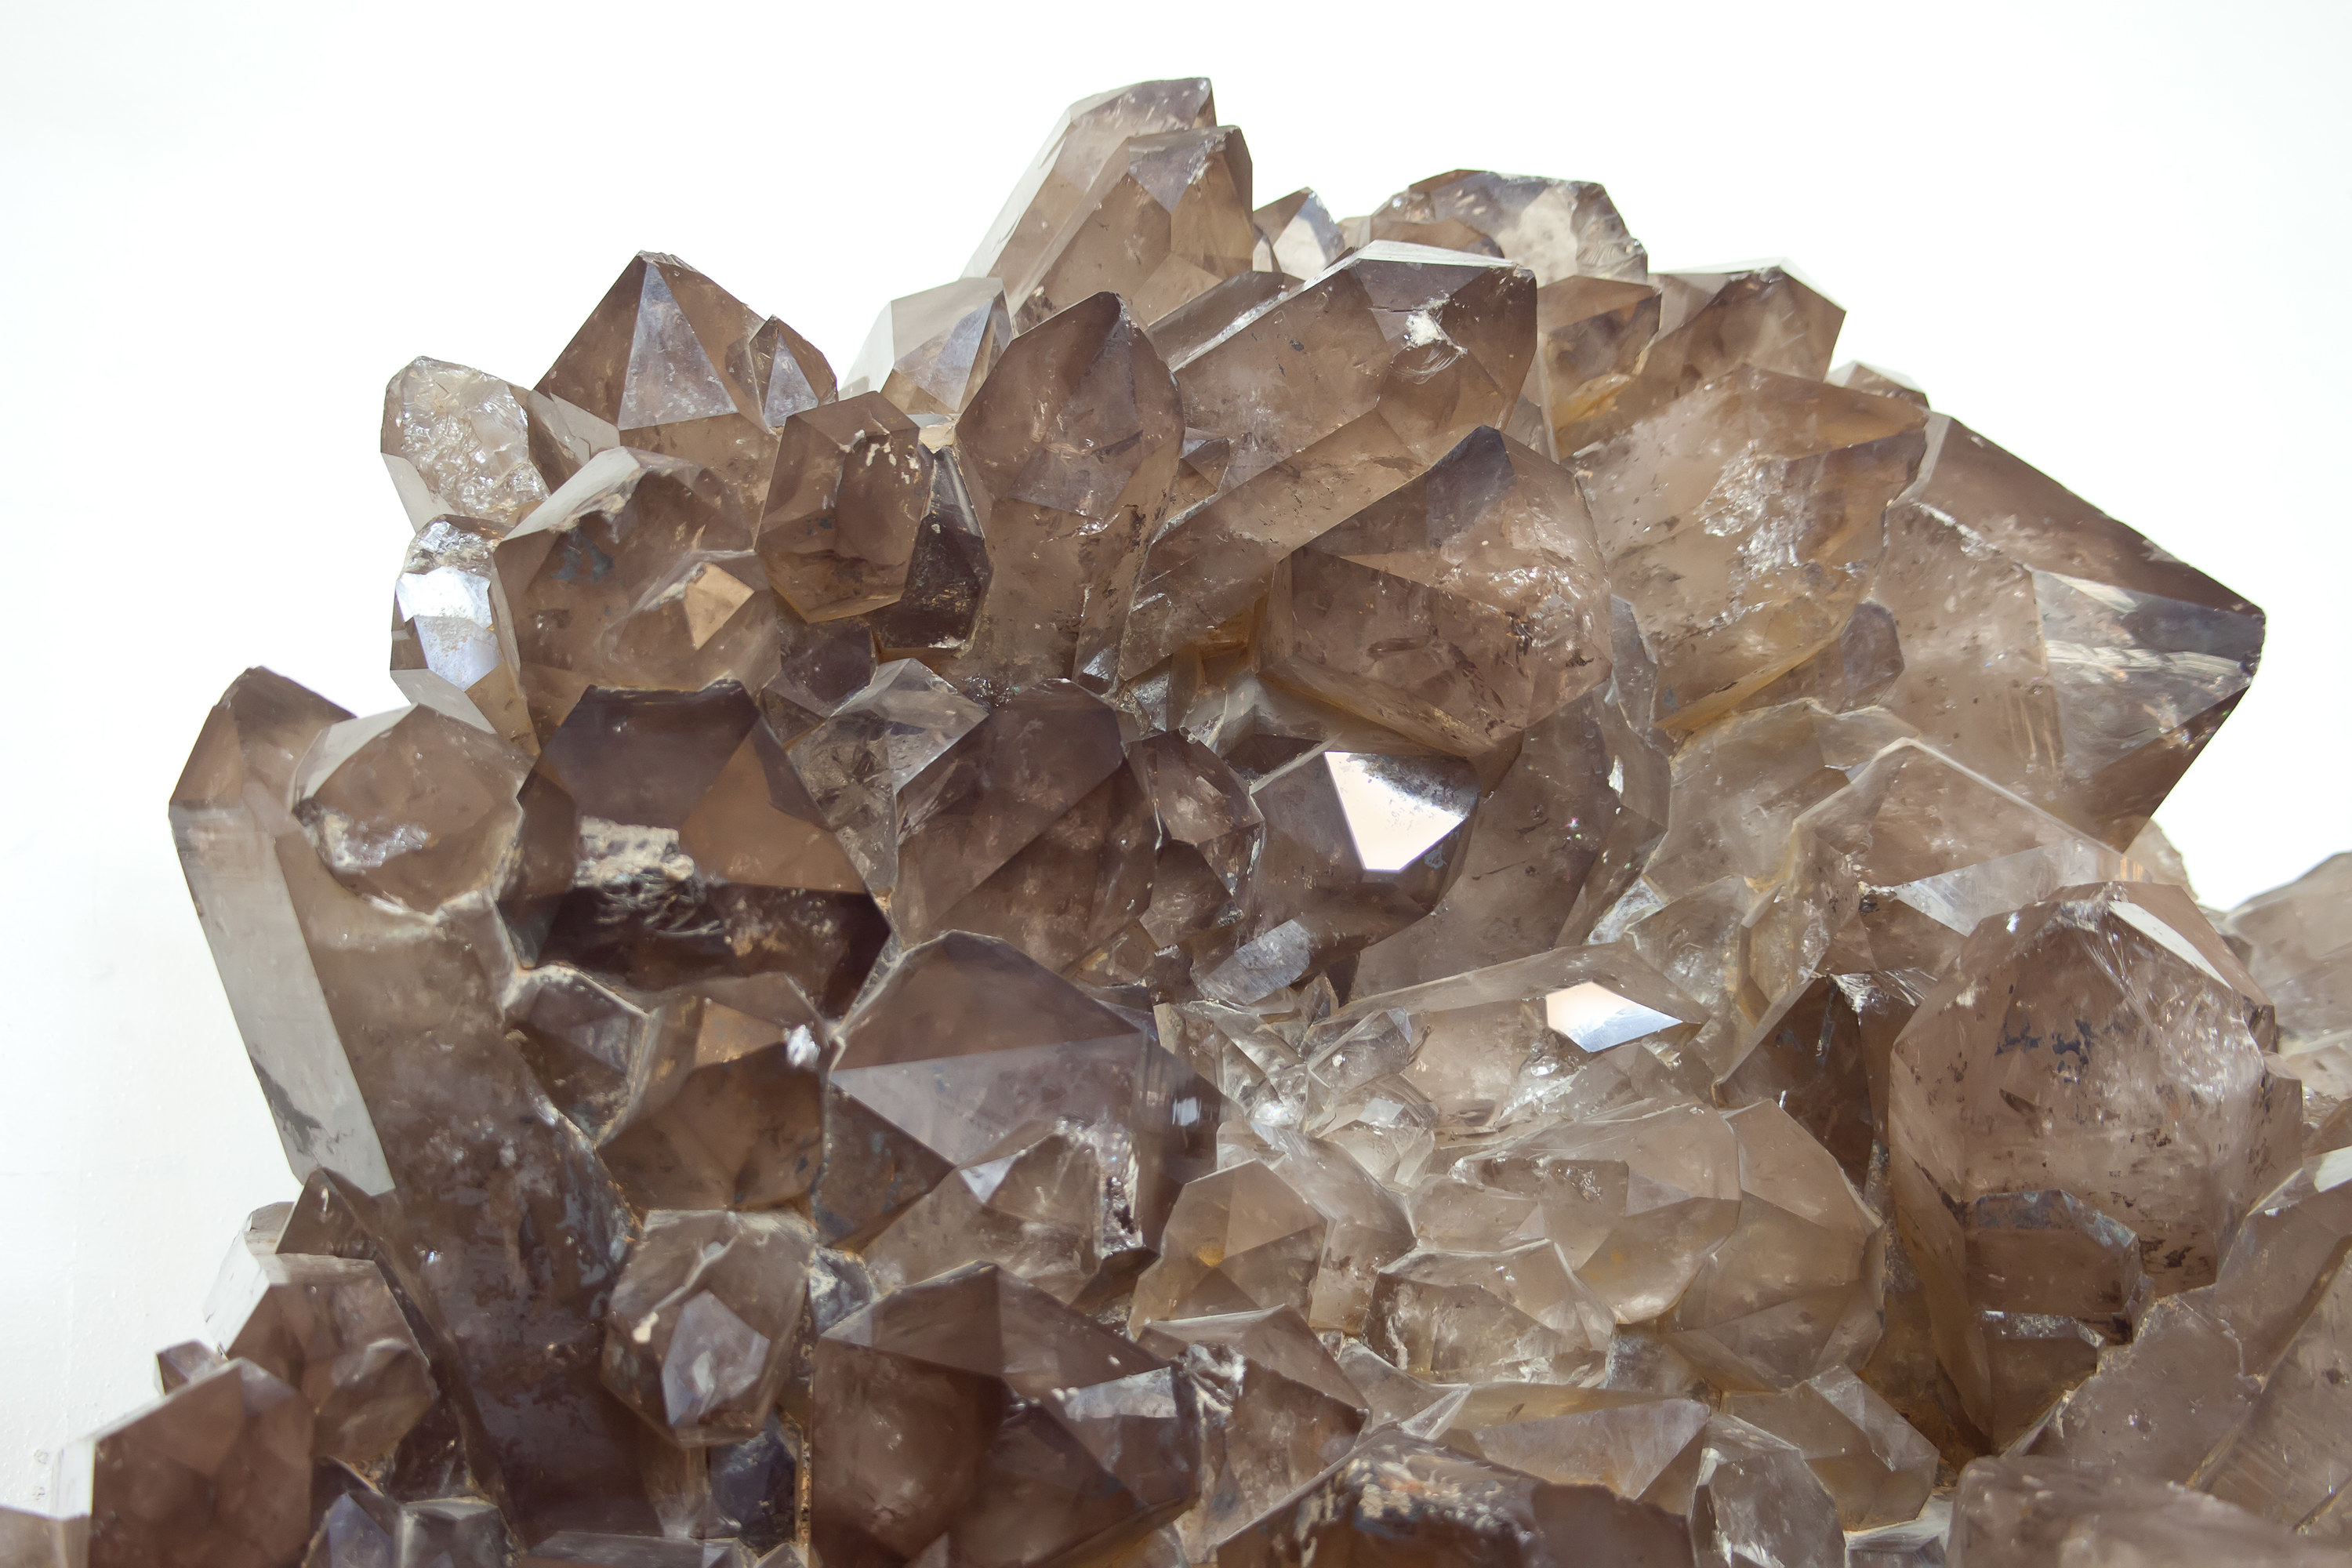 Cluster of smokey quartz crystals on white